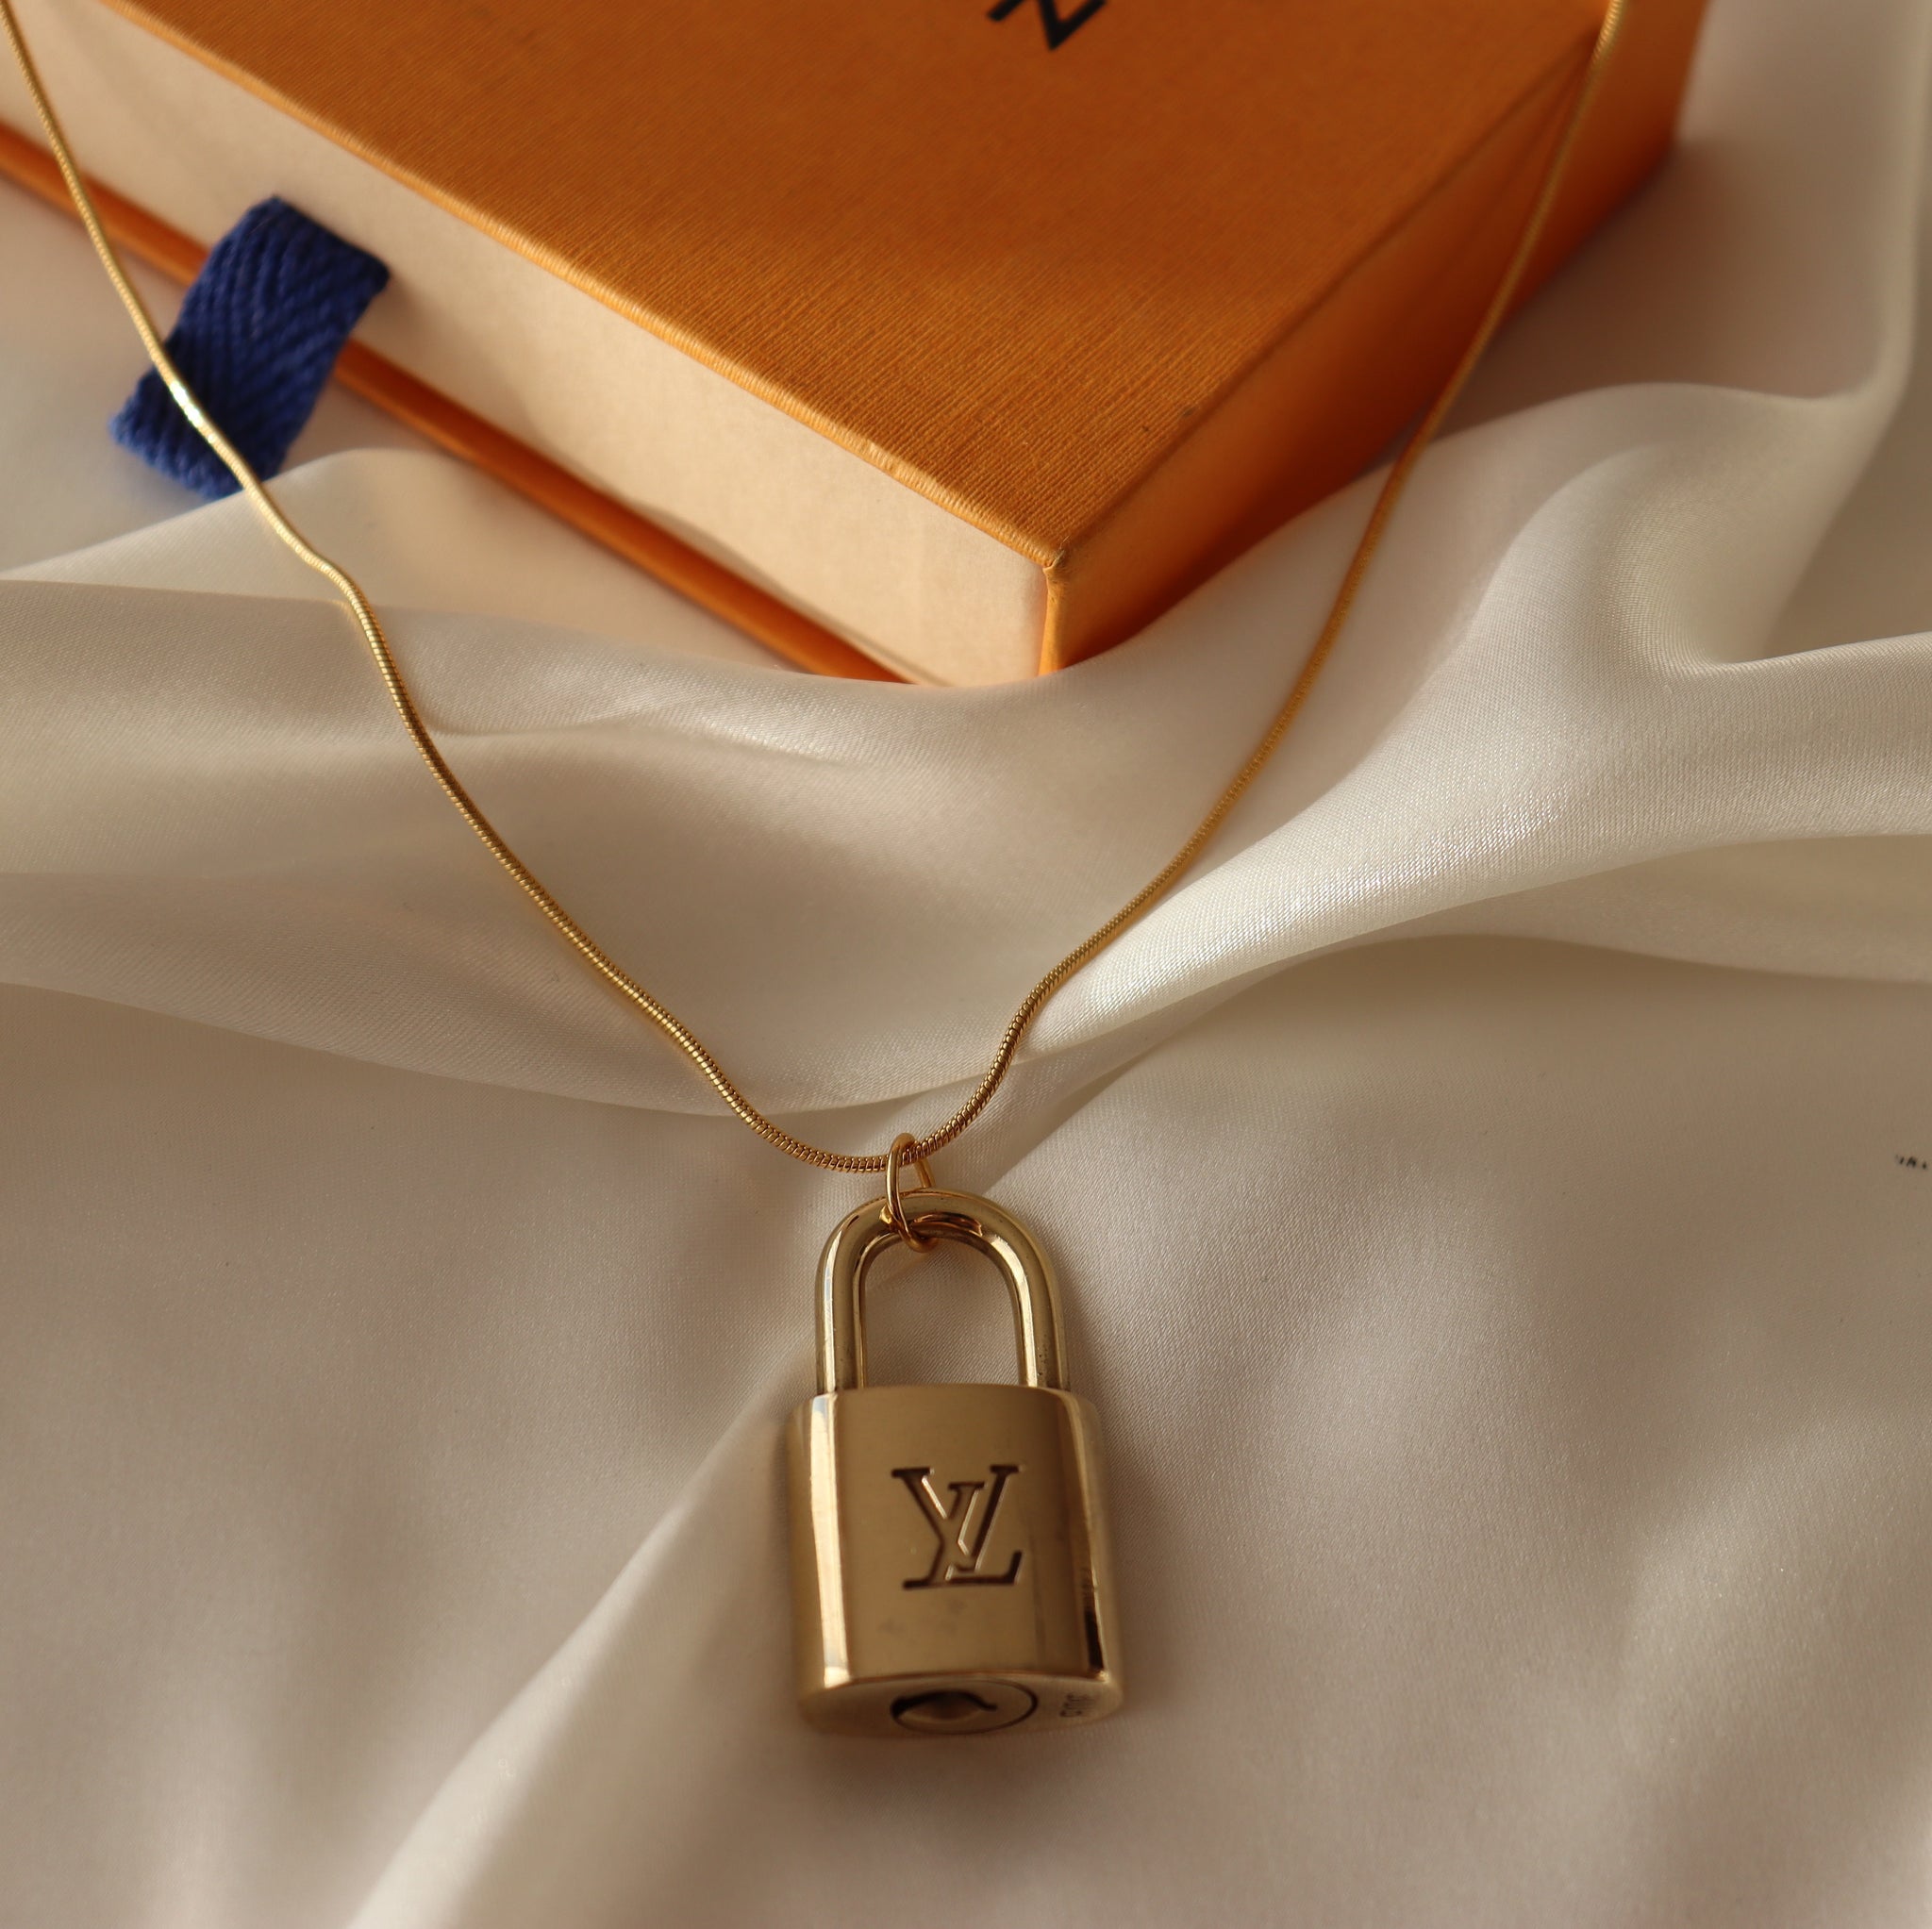 Rework Vintage Louis Vuitton Lock on Necklace (No Key) Relic the Label